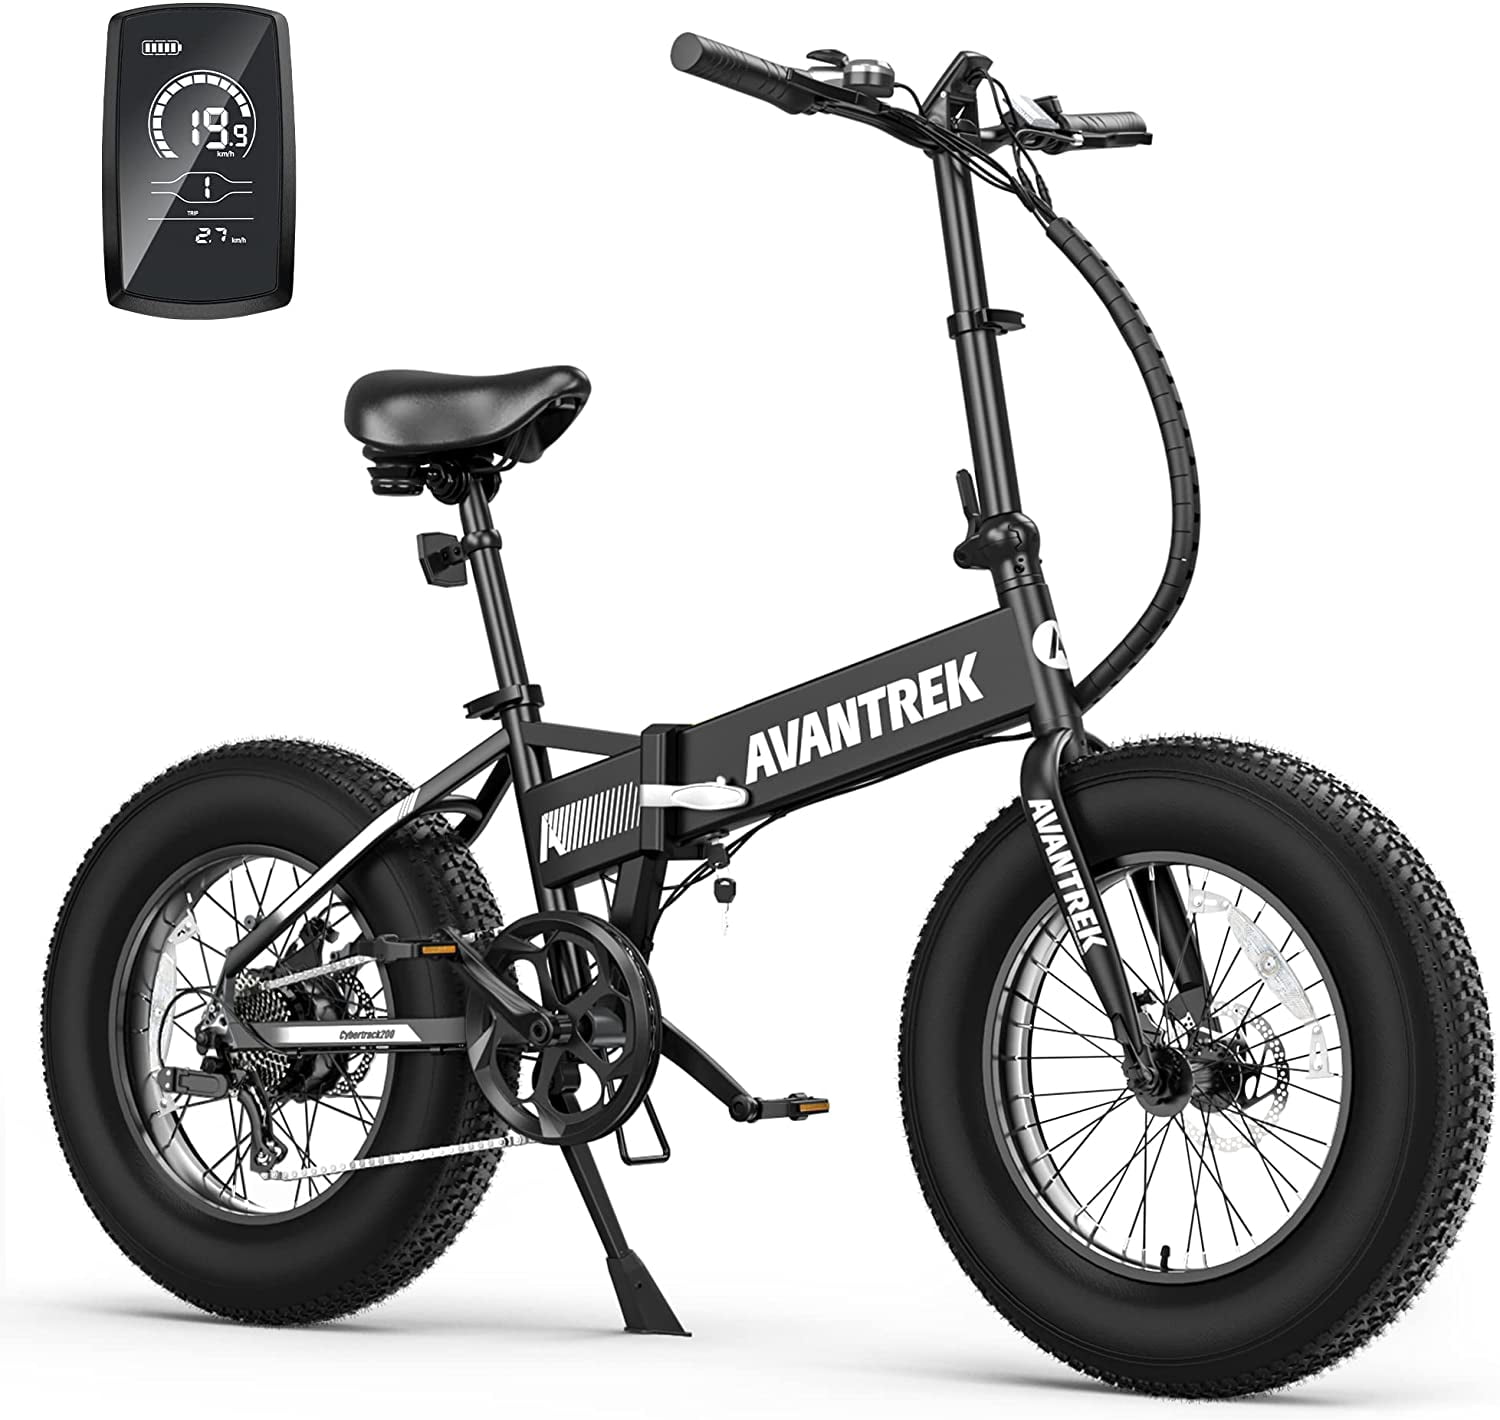 Bike Motorcycle Bicycle U Lock HEAVY DUTY Anti Theft Extra Long 12.5" x 7" NEW 